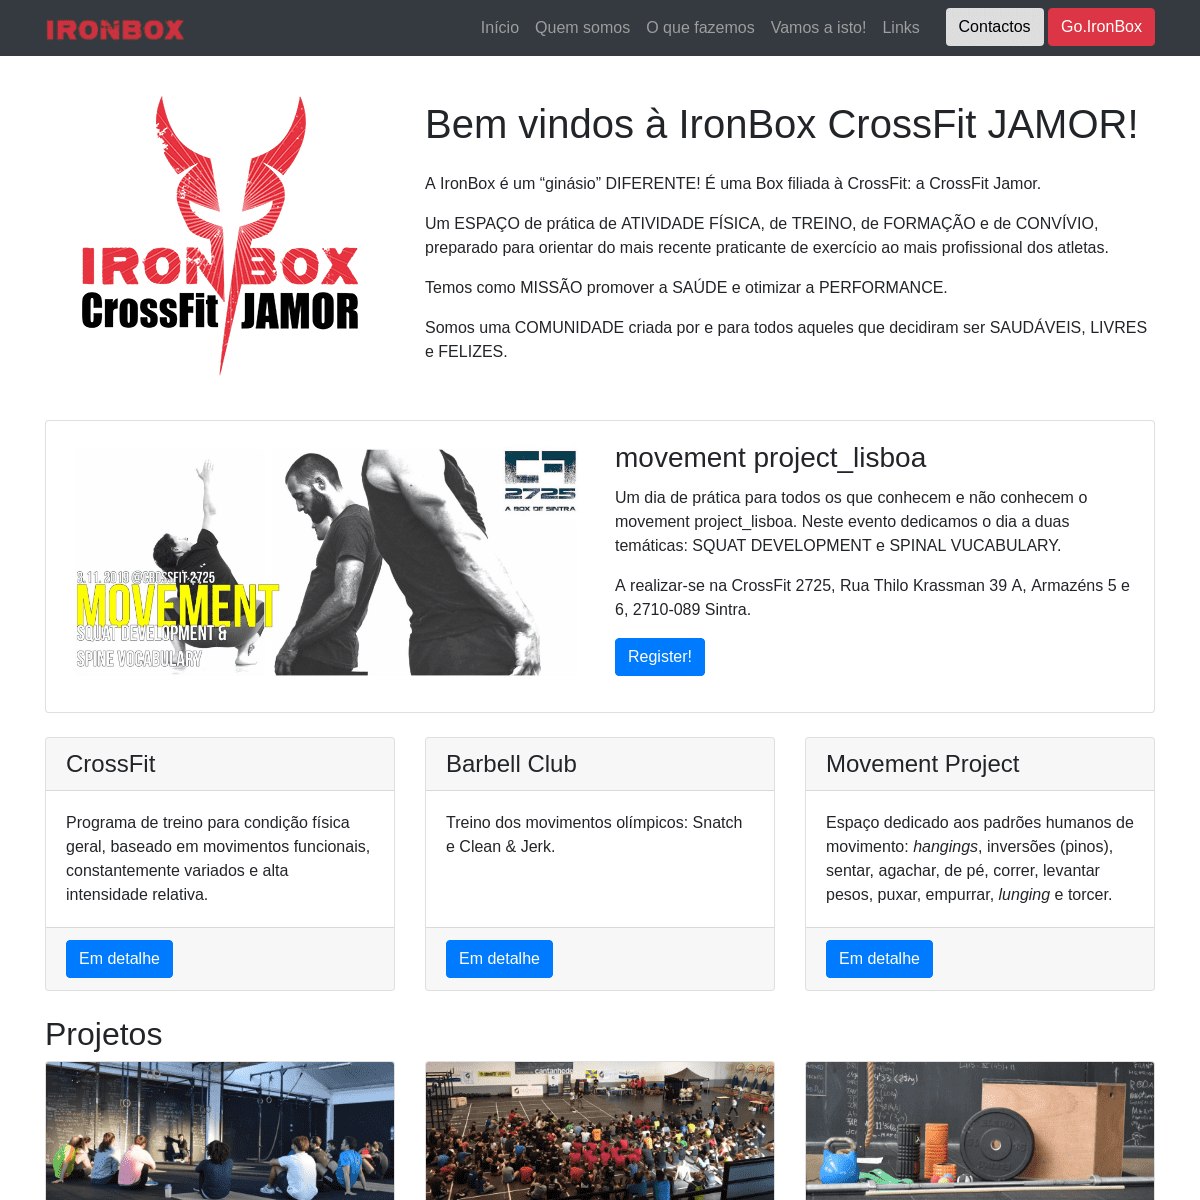 IronBox - CrossFit Jamor